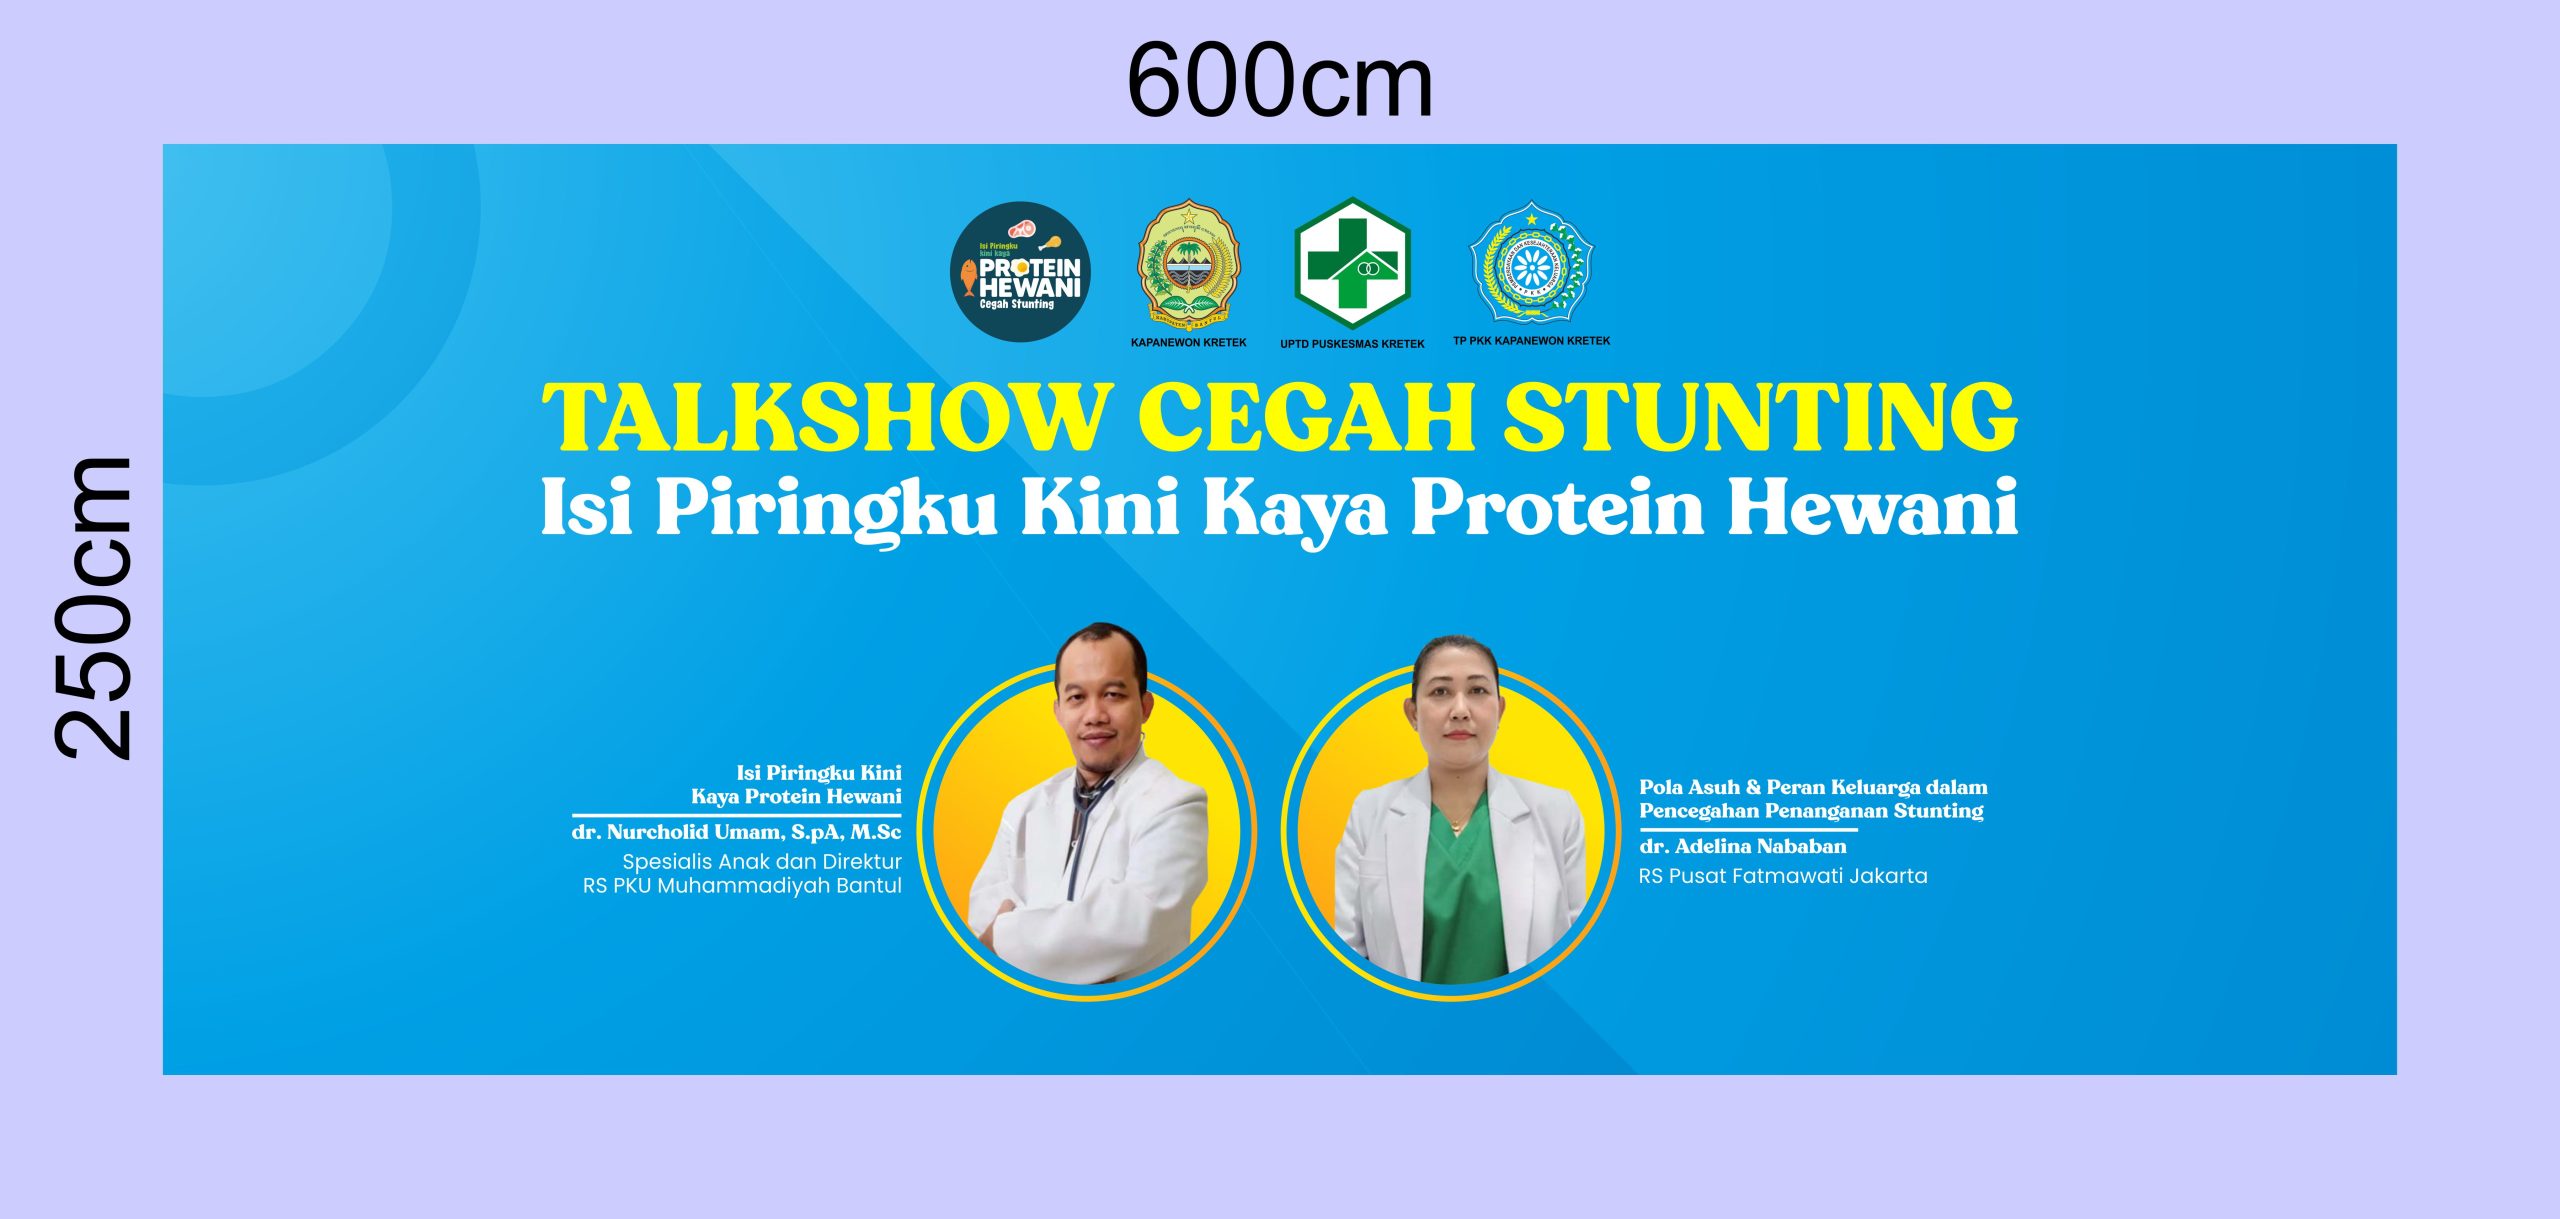 Cegah Stunting Isi Piringku Kini Kaya Protein Hewani Talkshow Banner Desain Vector